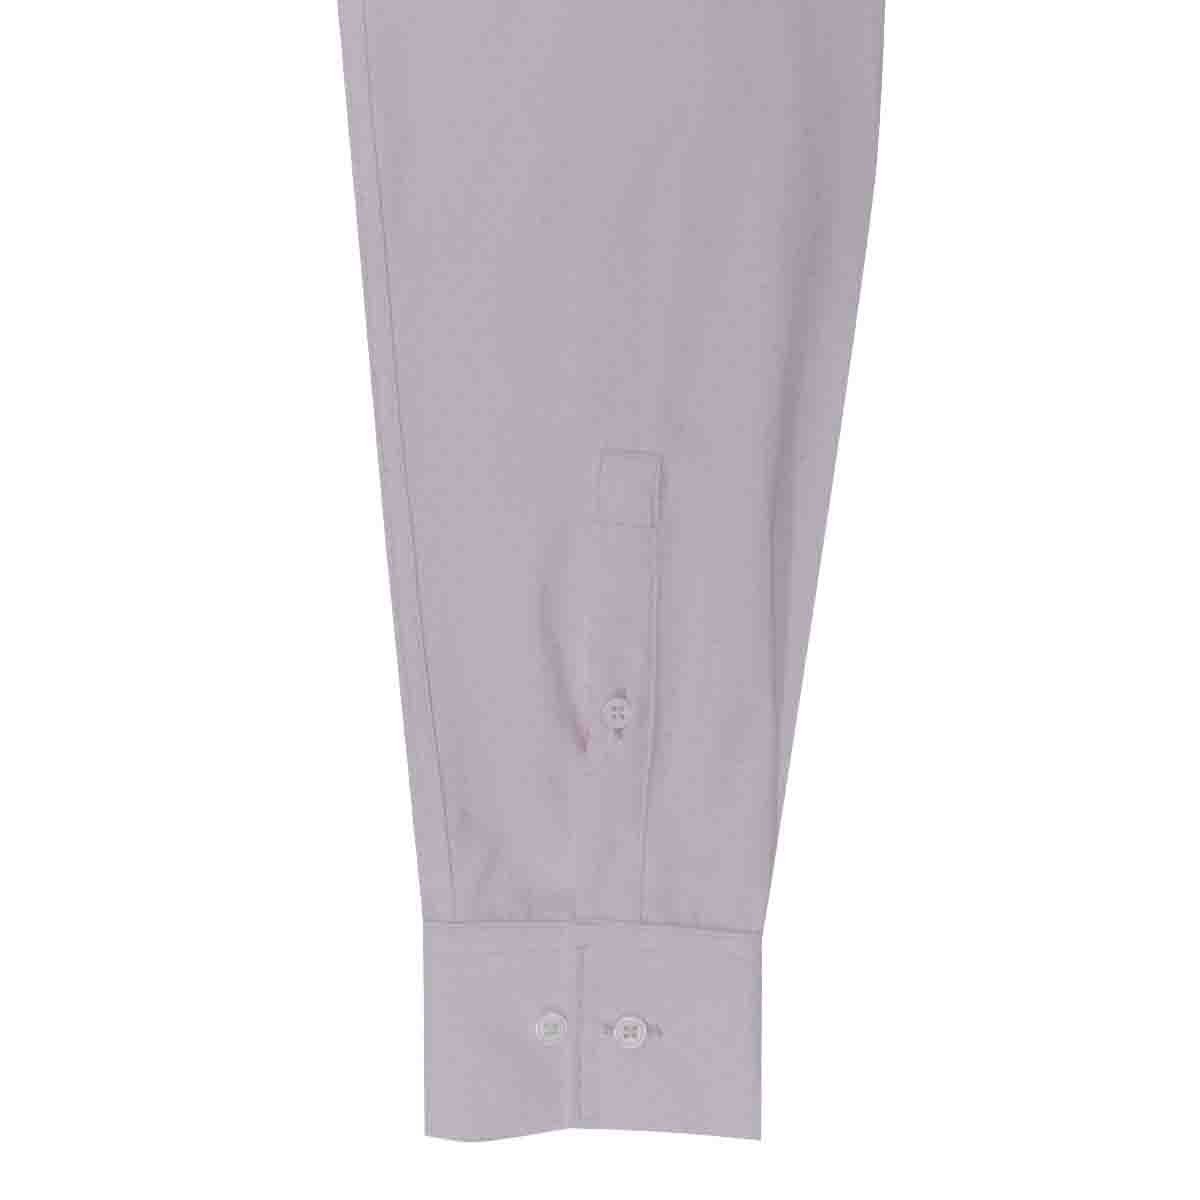 Camisa de Vestir Rosa Corte Ultra Slim Chaps para Caballero